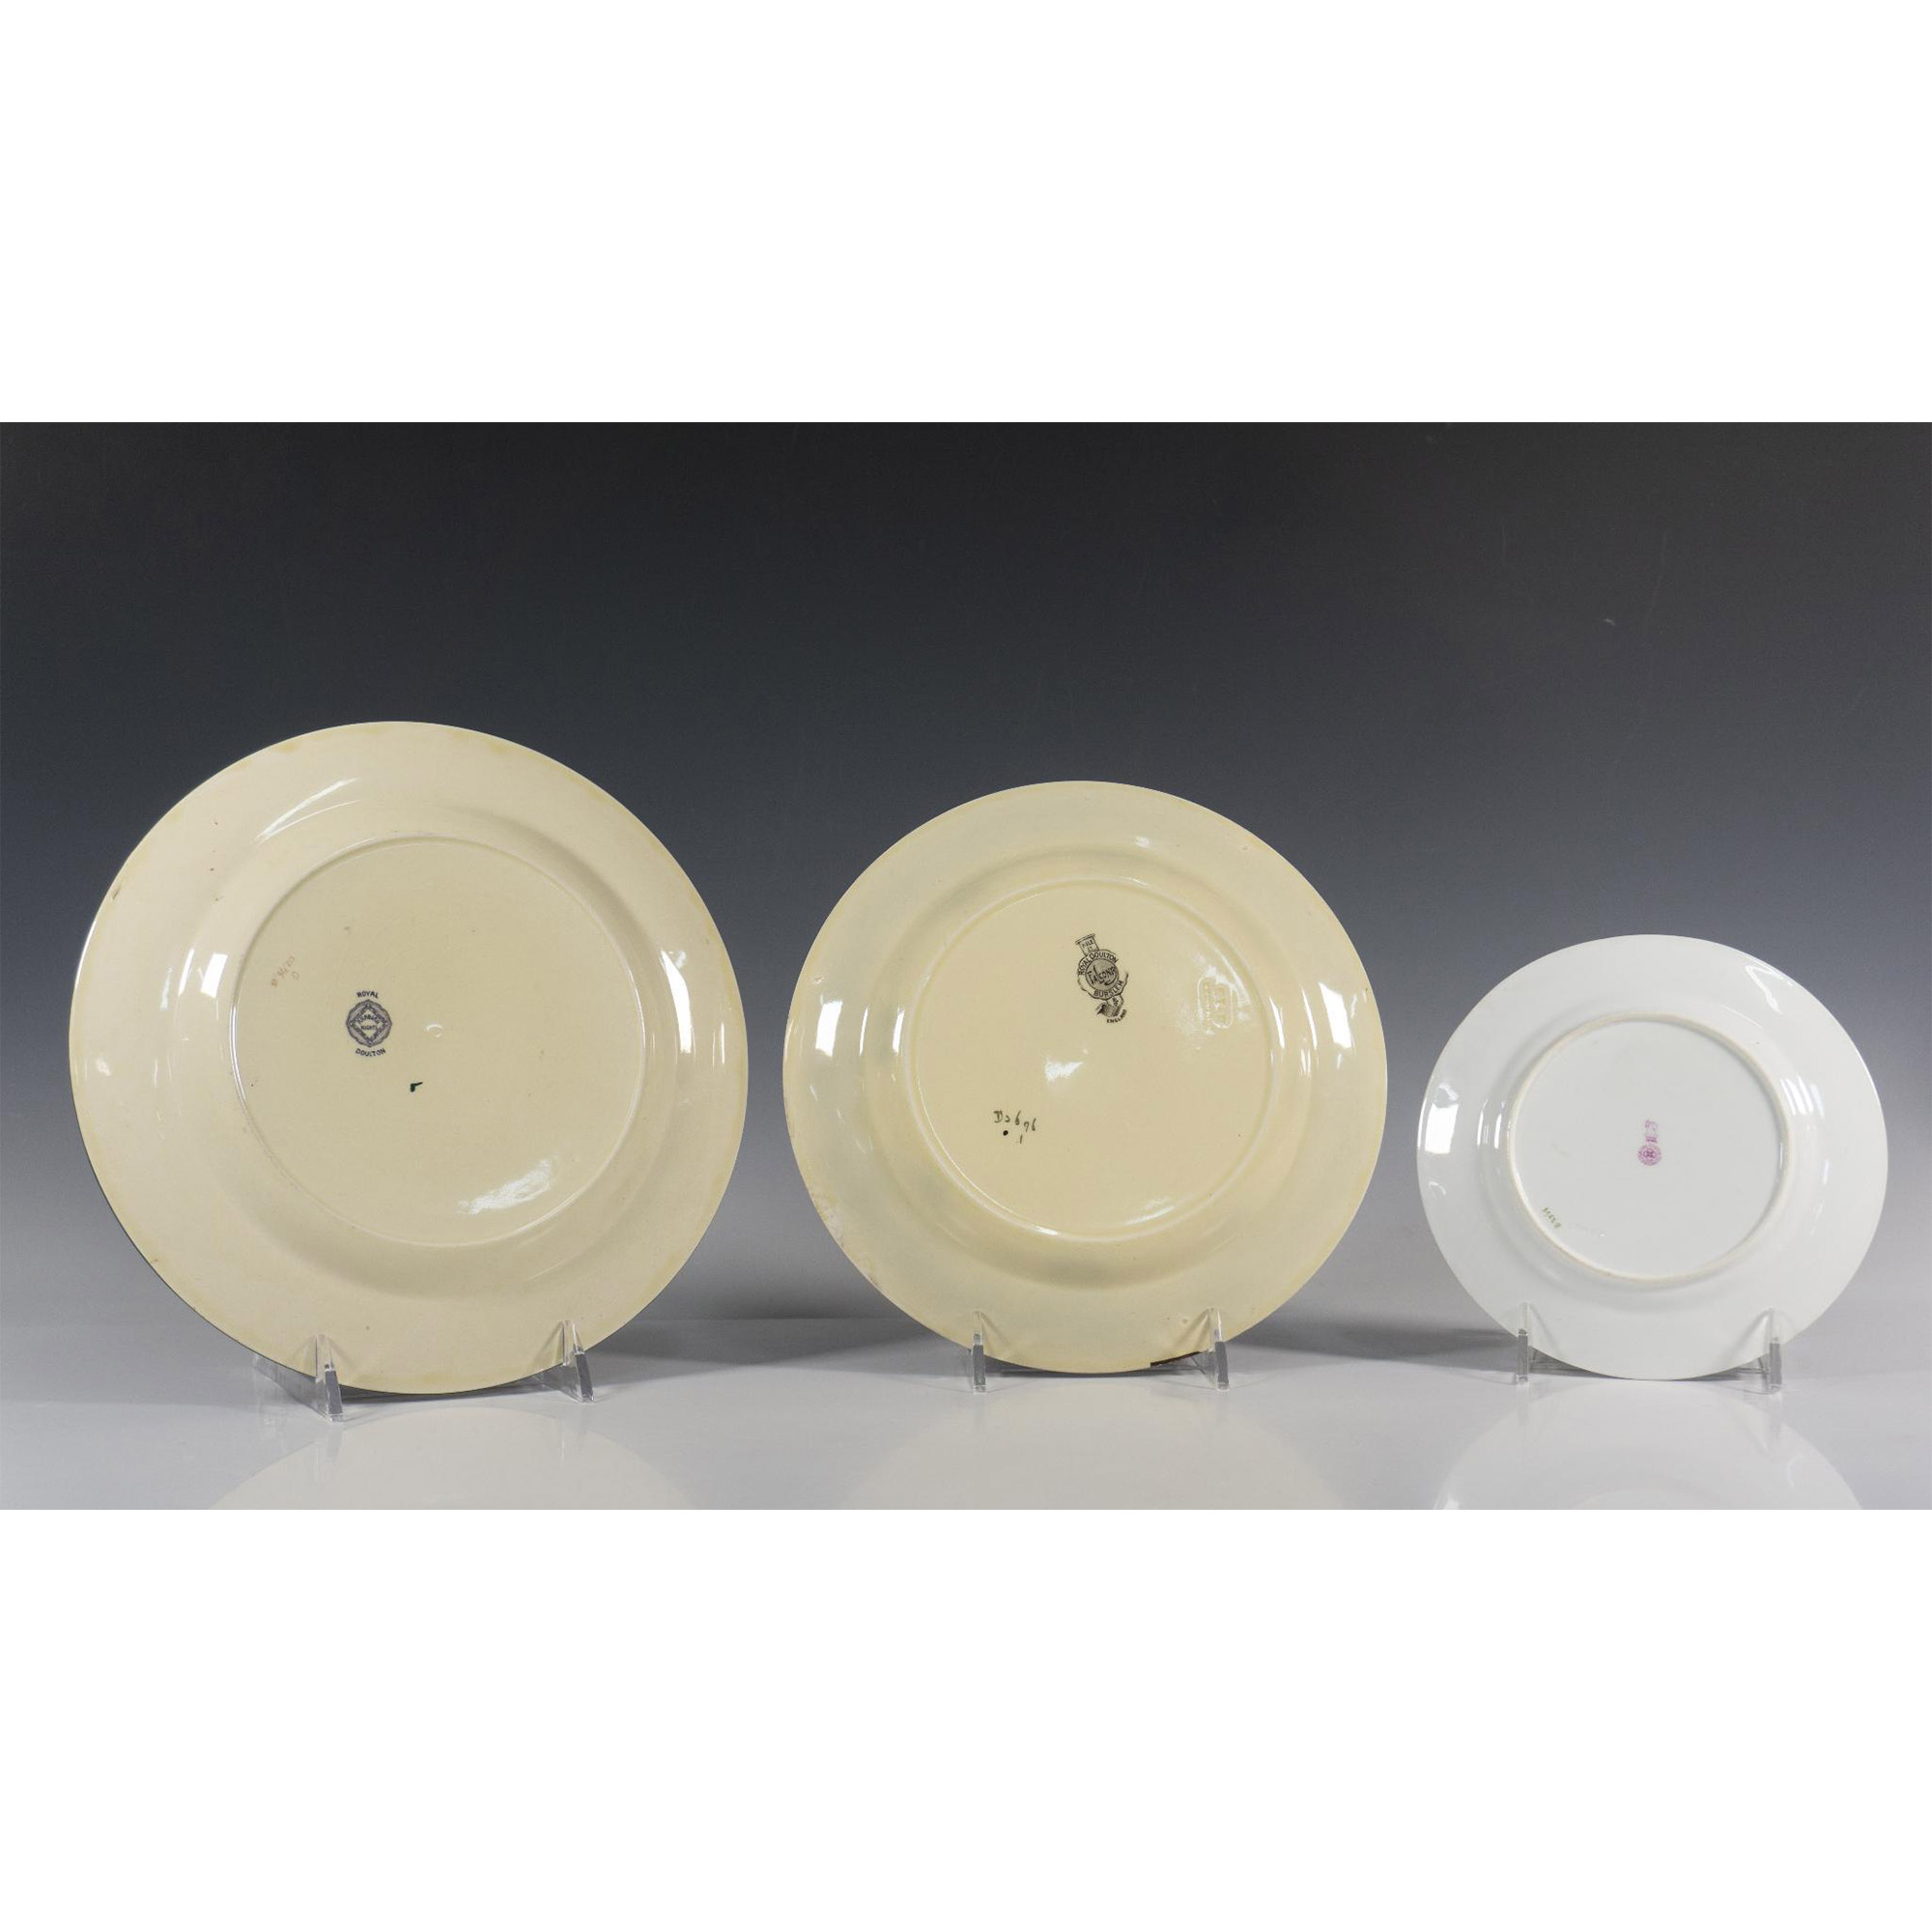 3pc Royal Doulton Series Ware Plates - Image 2 of 3